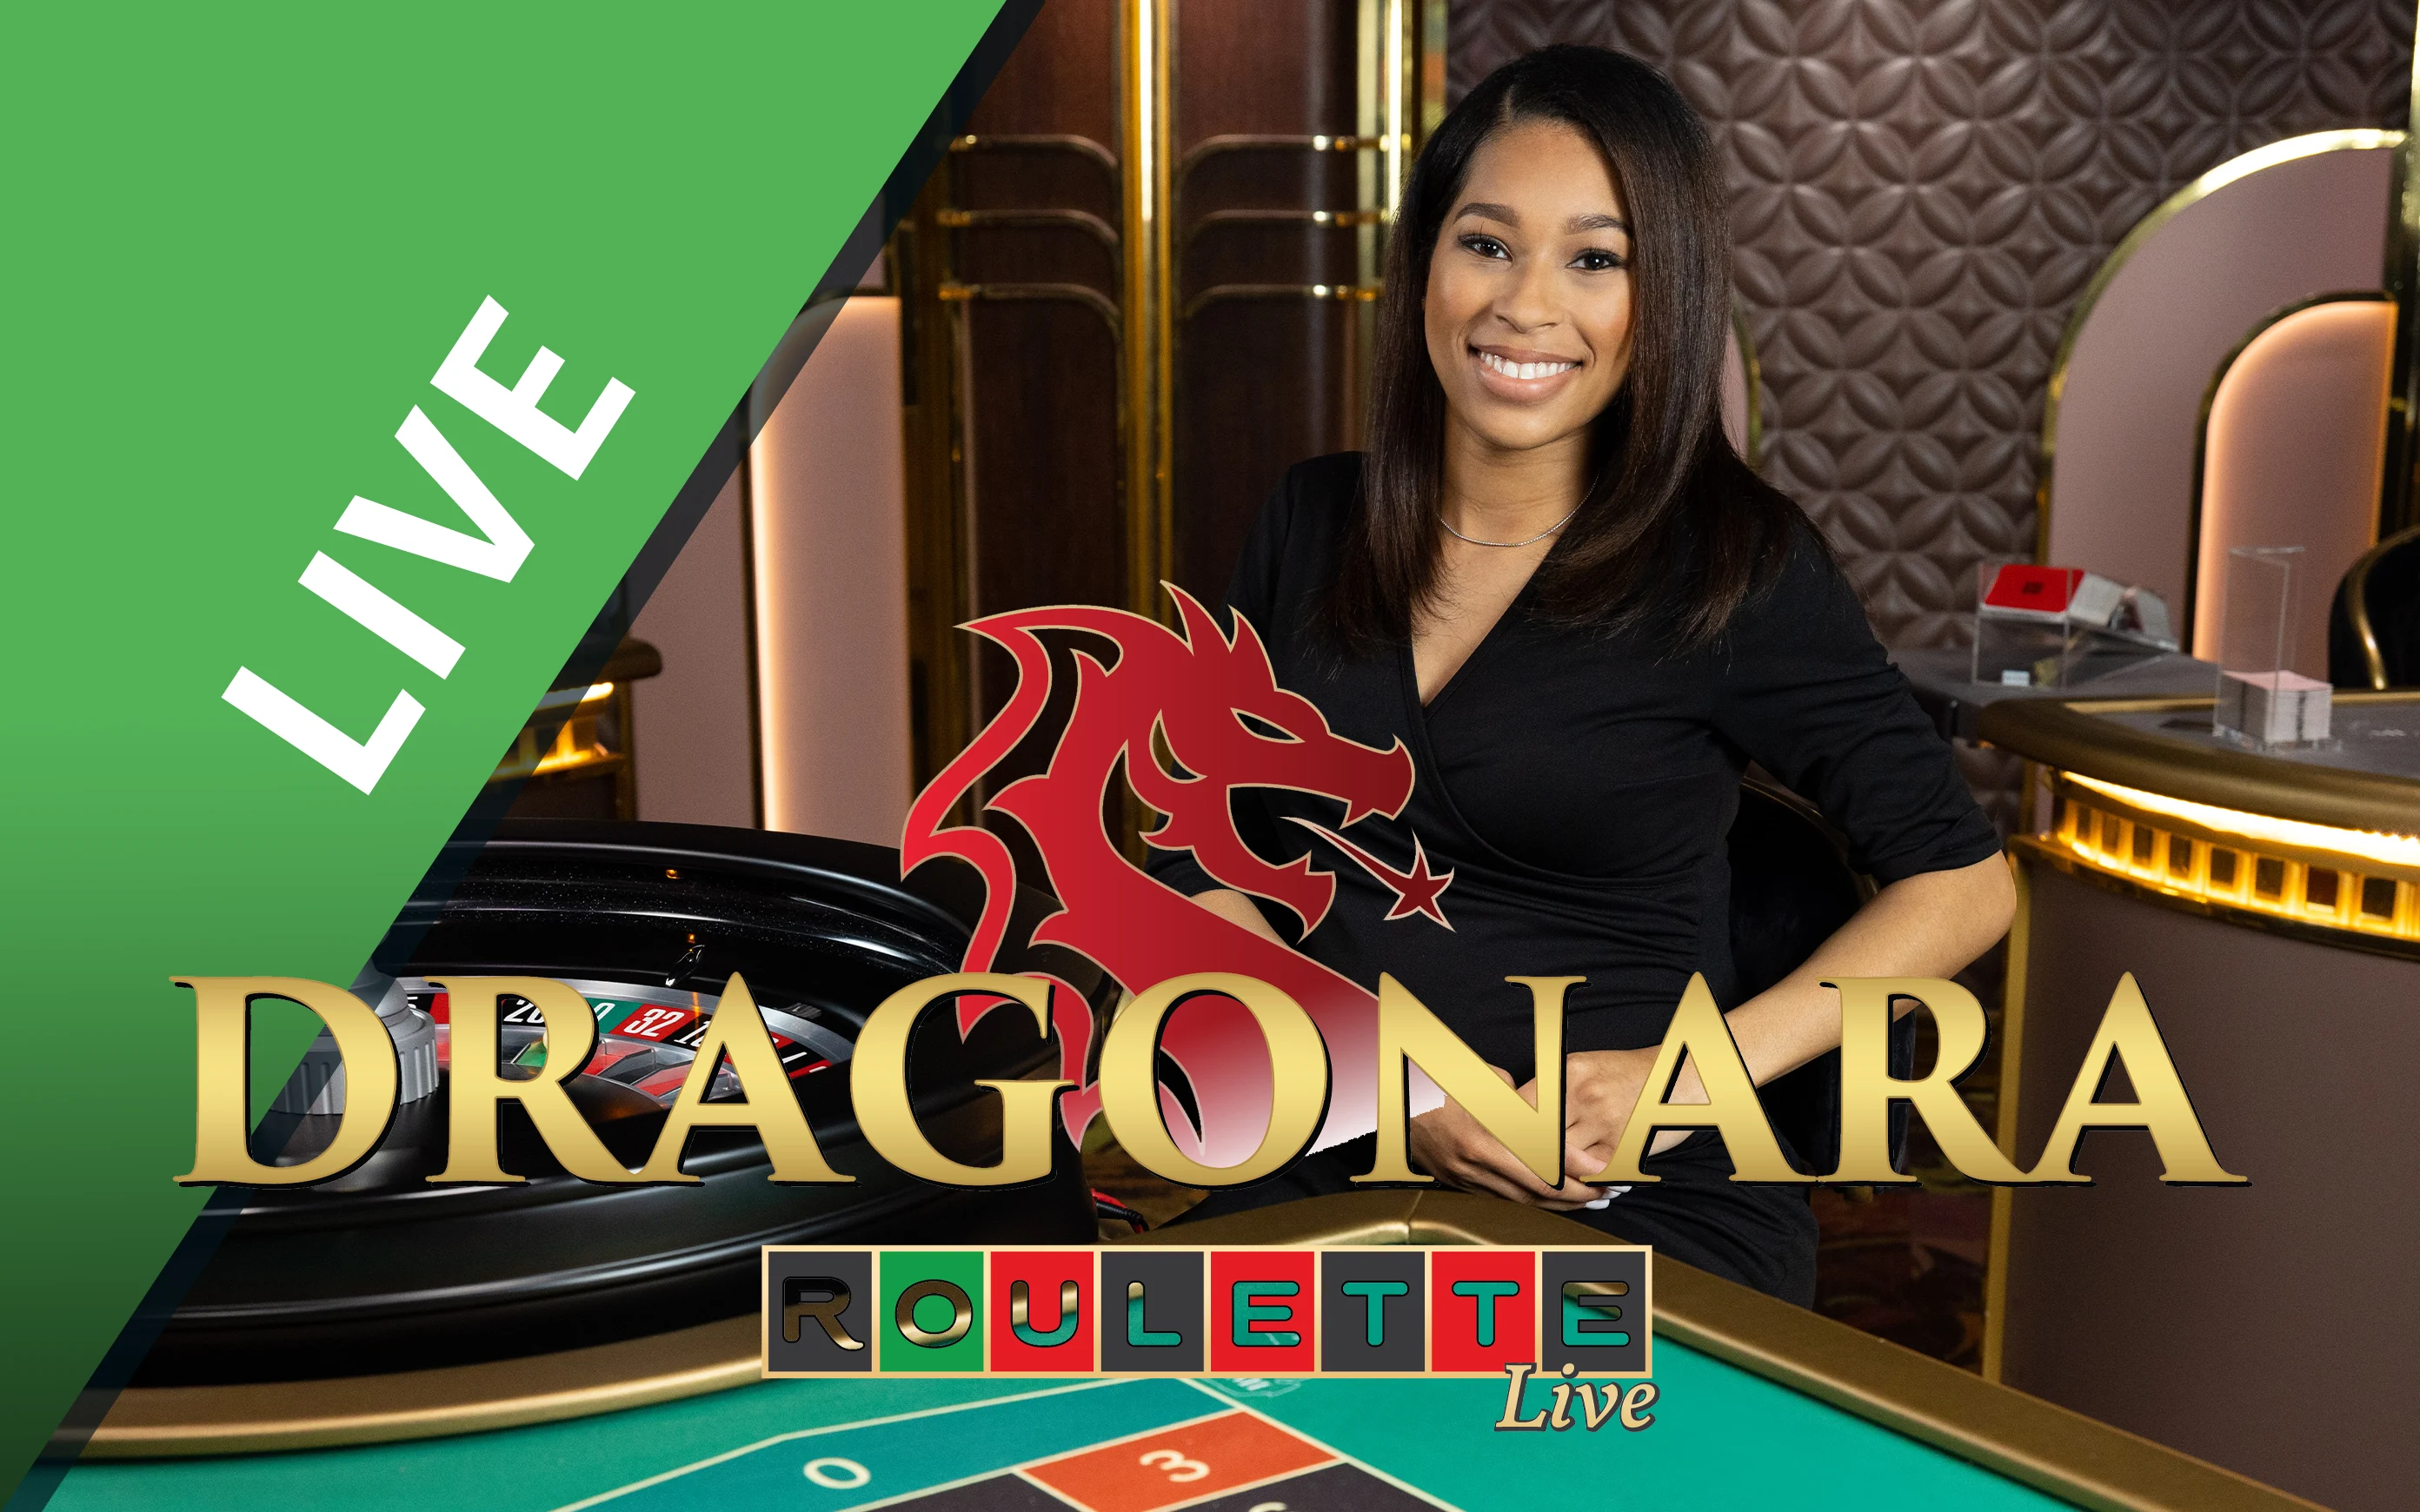 Play Dragonara Roulette on Starcasino.be online casino